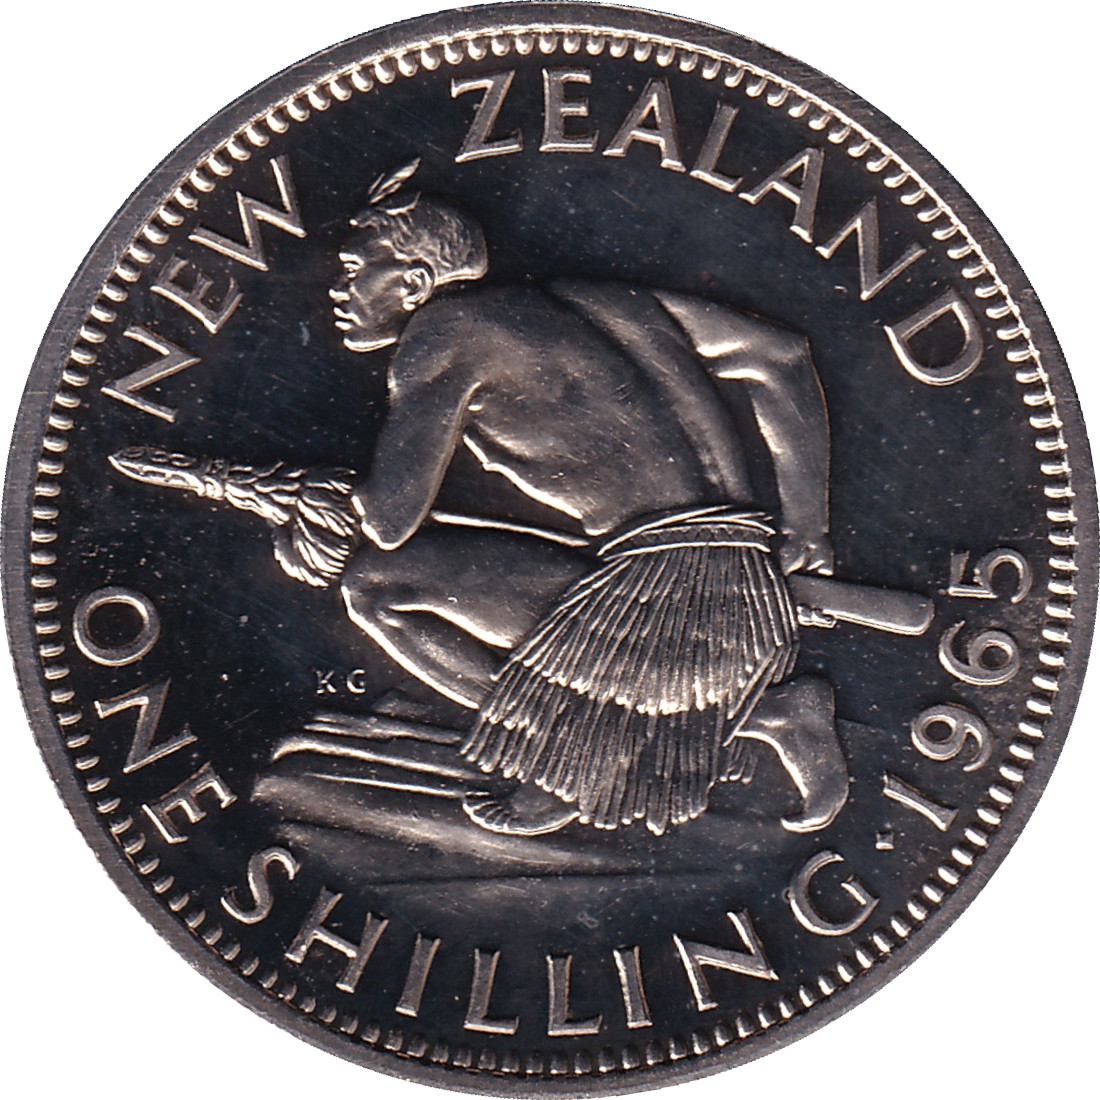 1 shilling - Elizabeth II